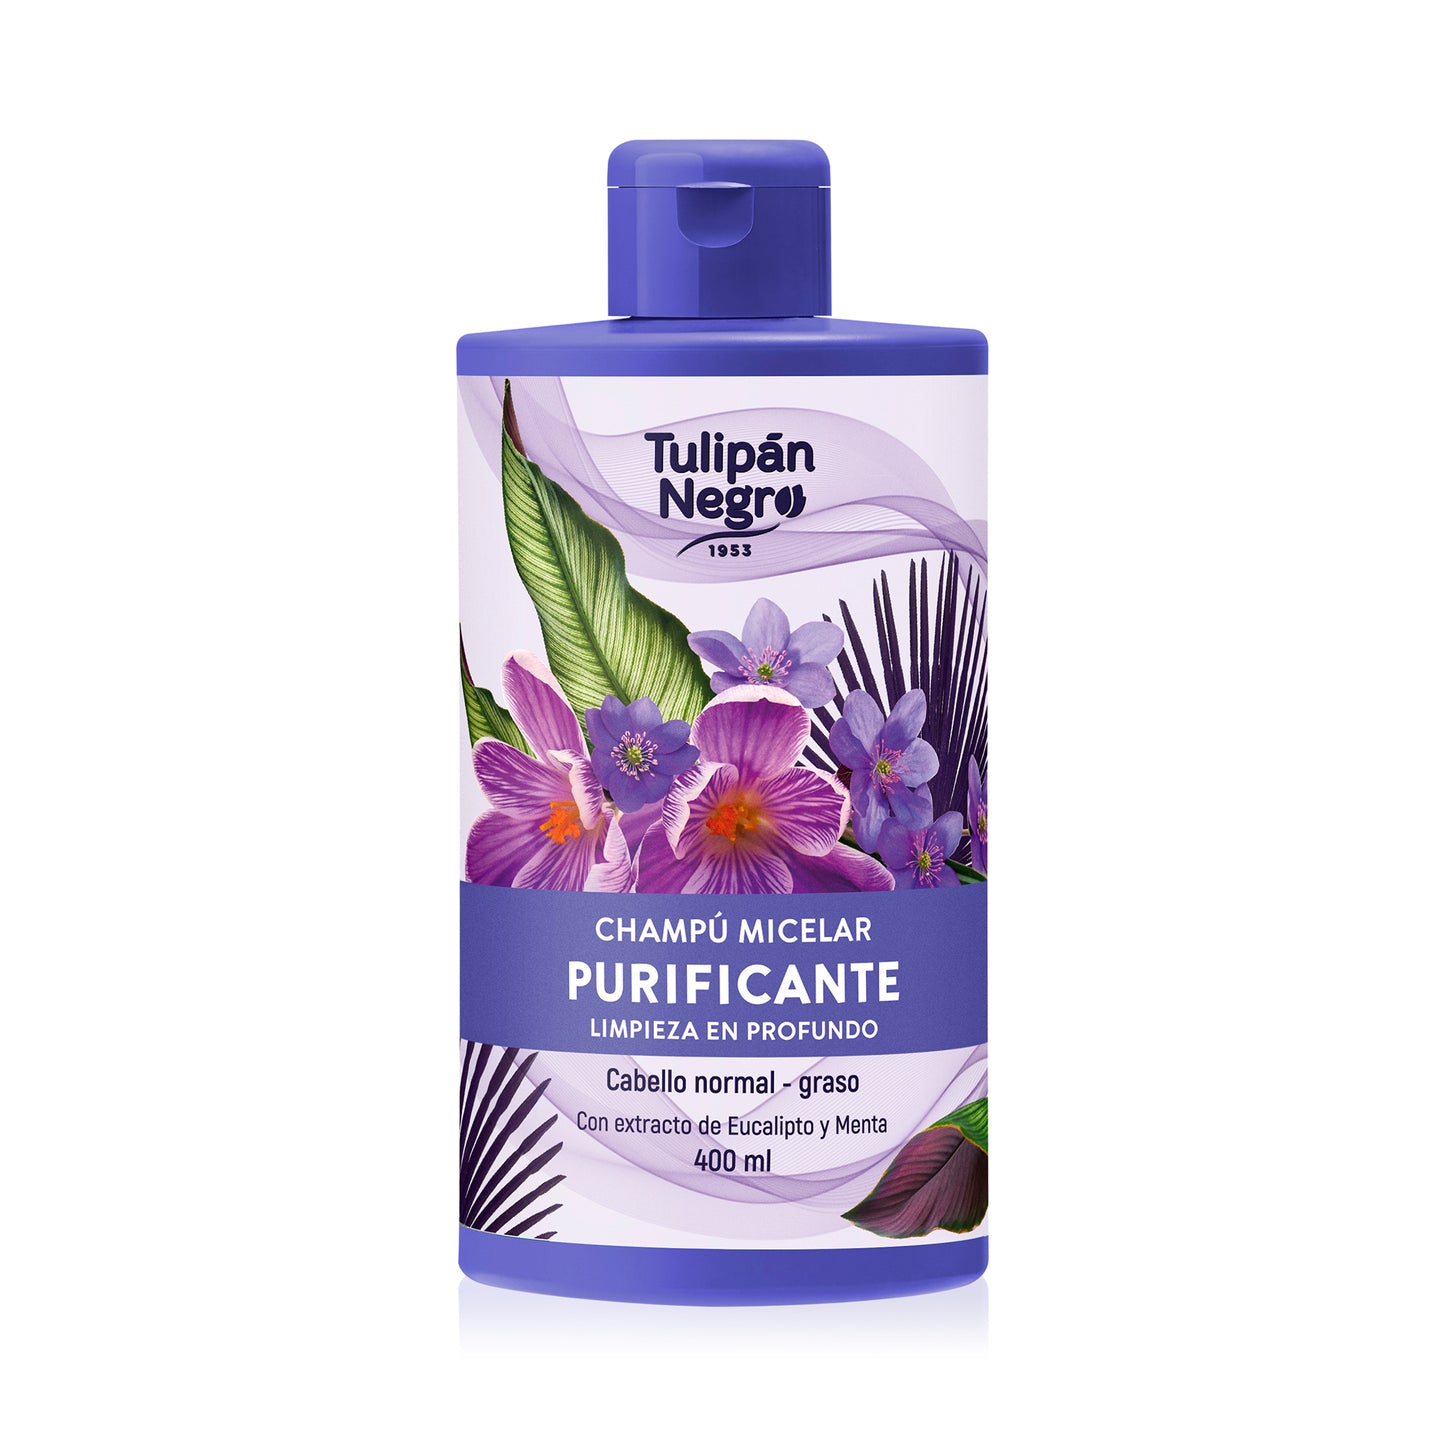 Tulipan Negro Shampoo Purifying - 400ml